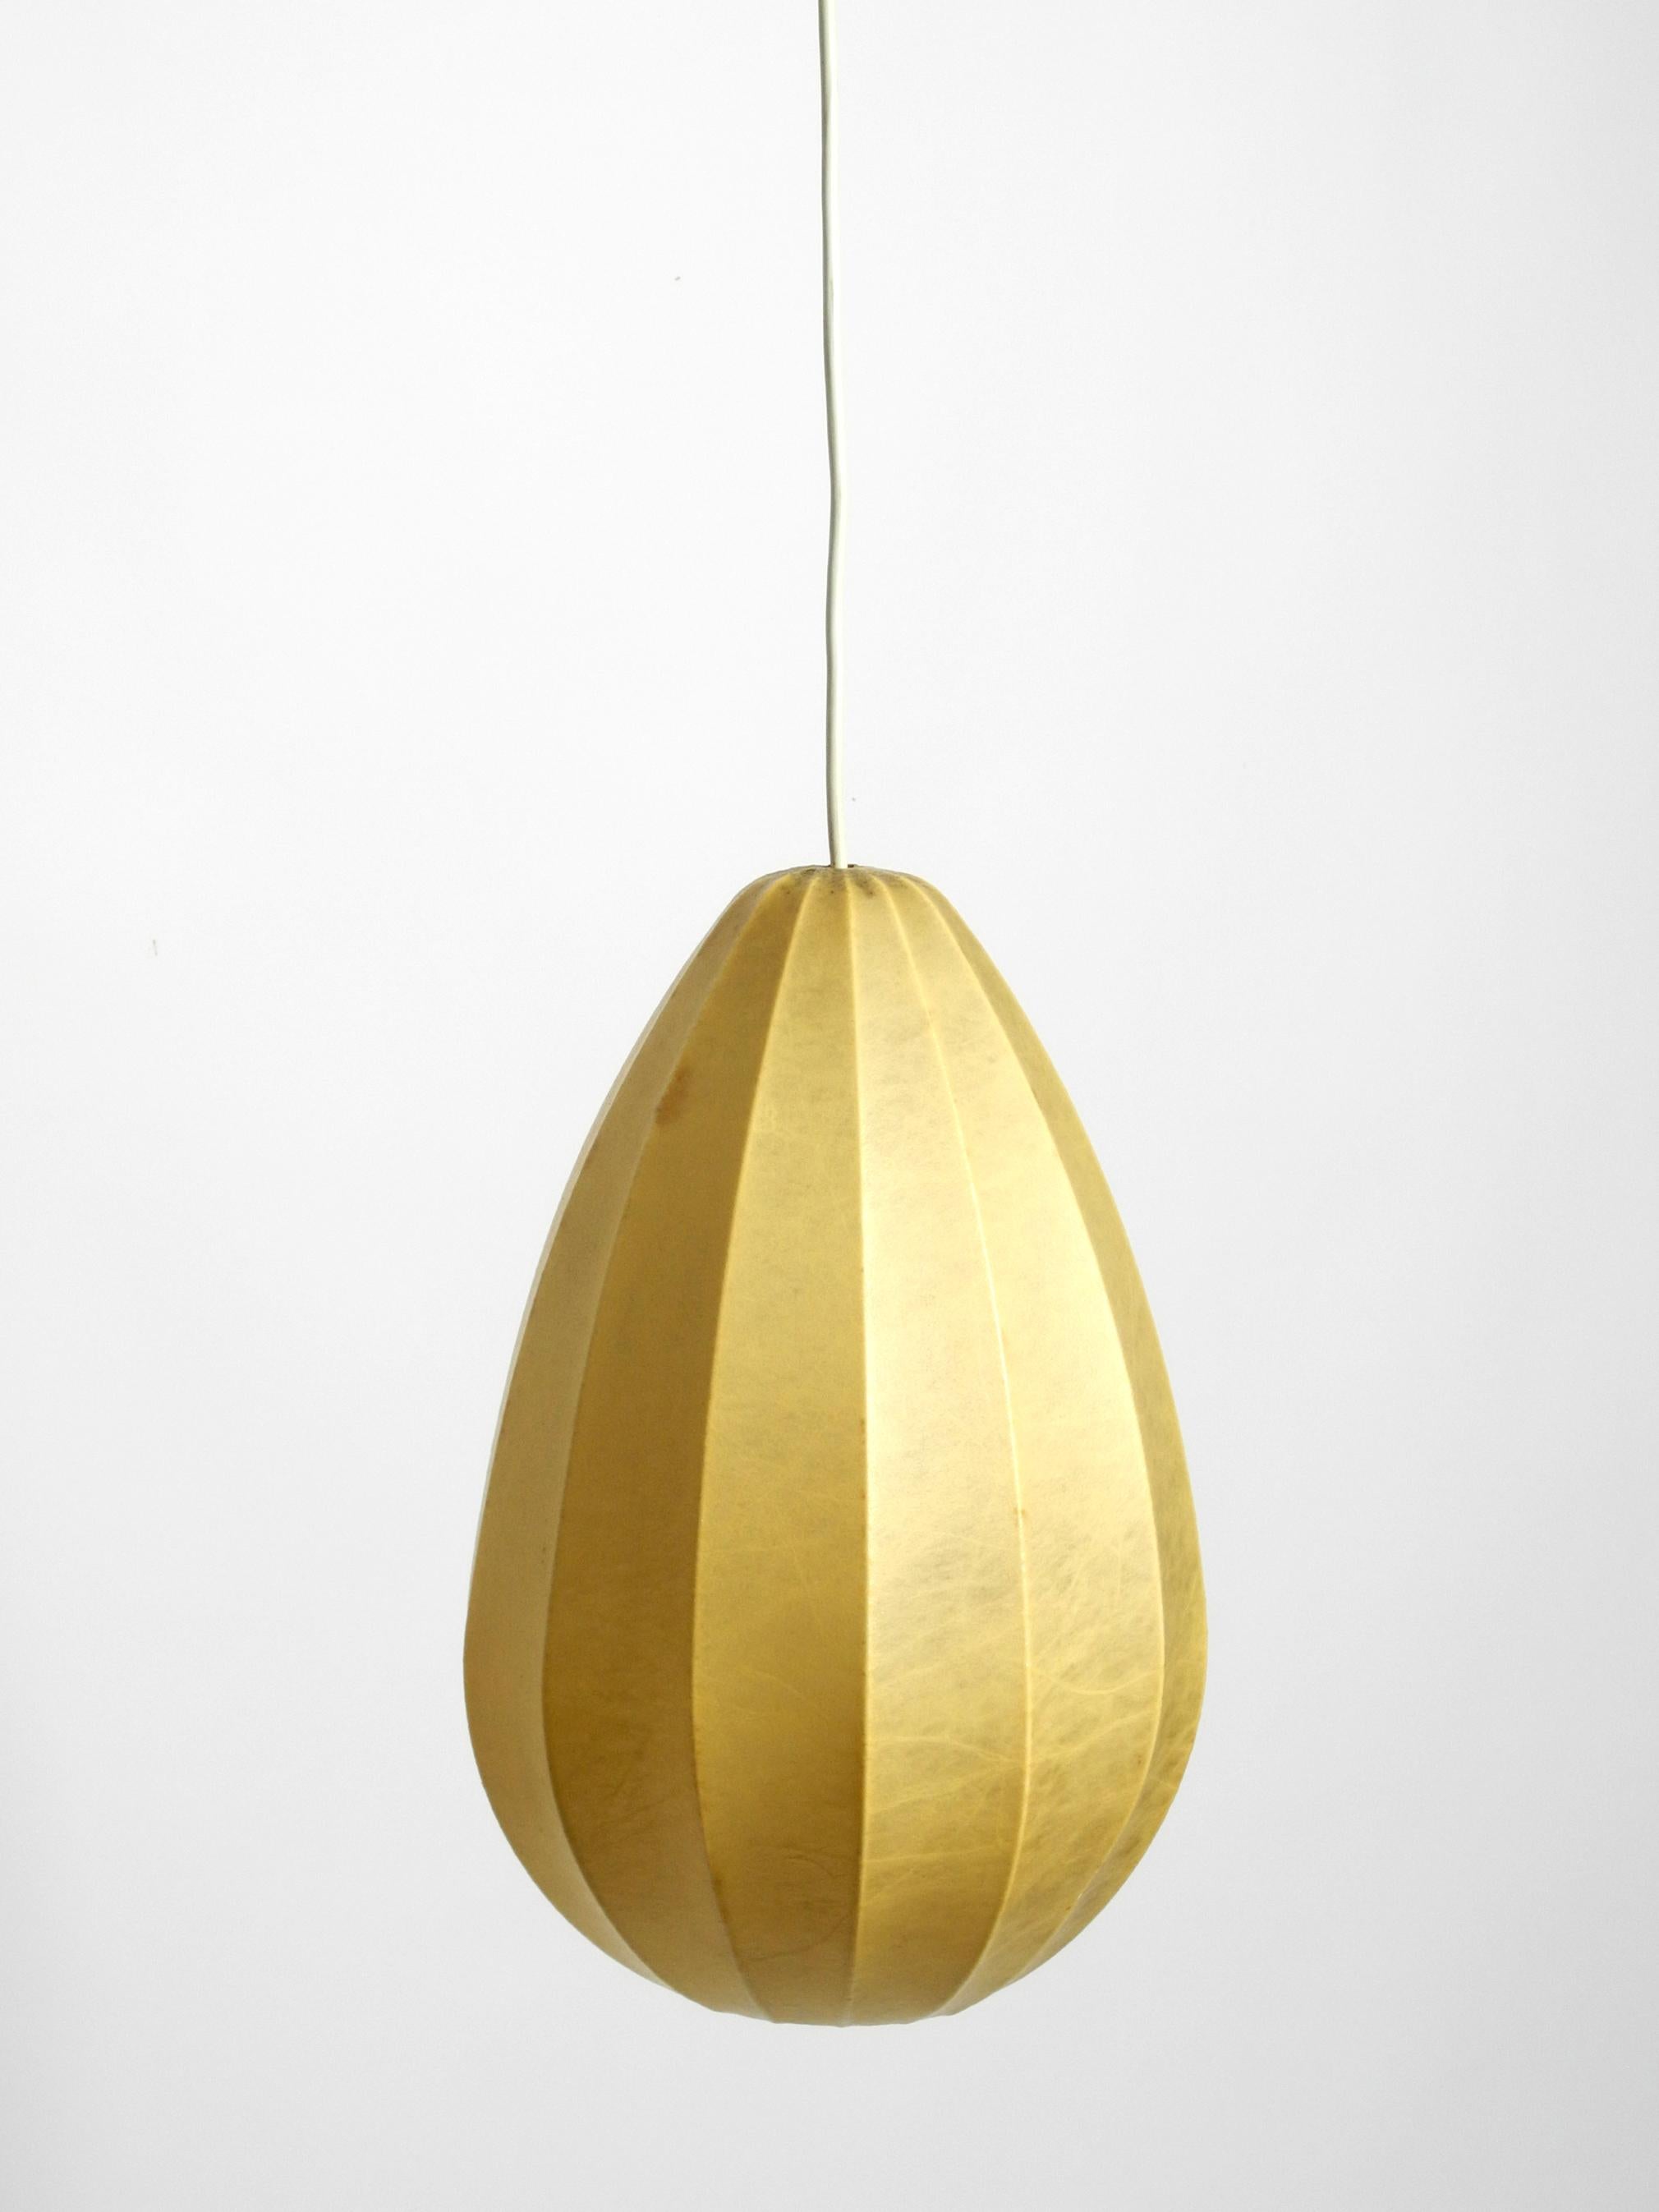 Metal Very beautiful 1960s vintage Cocoon pendant lamp in a minimalist design